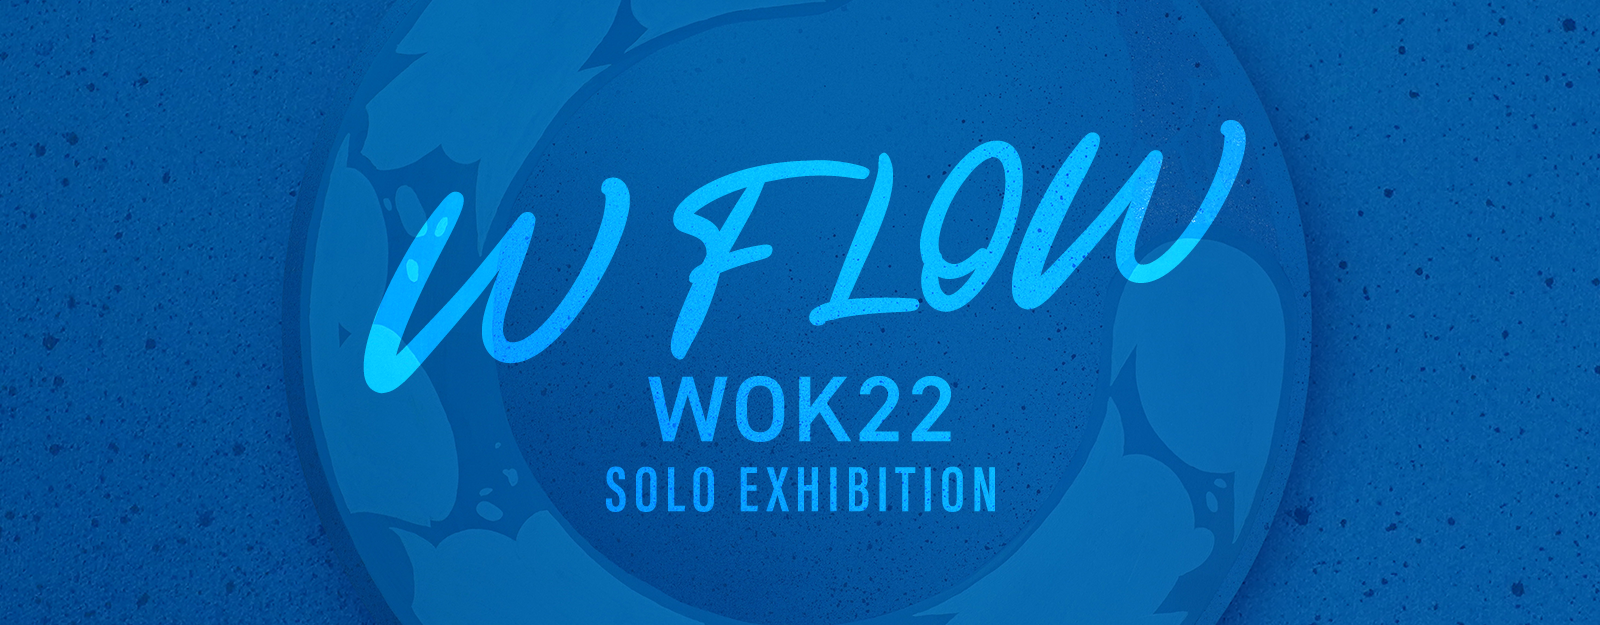 WOK22 solo exhibition “W FLOW” 